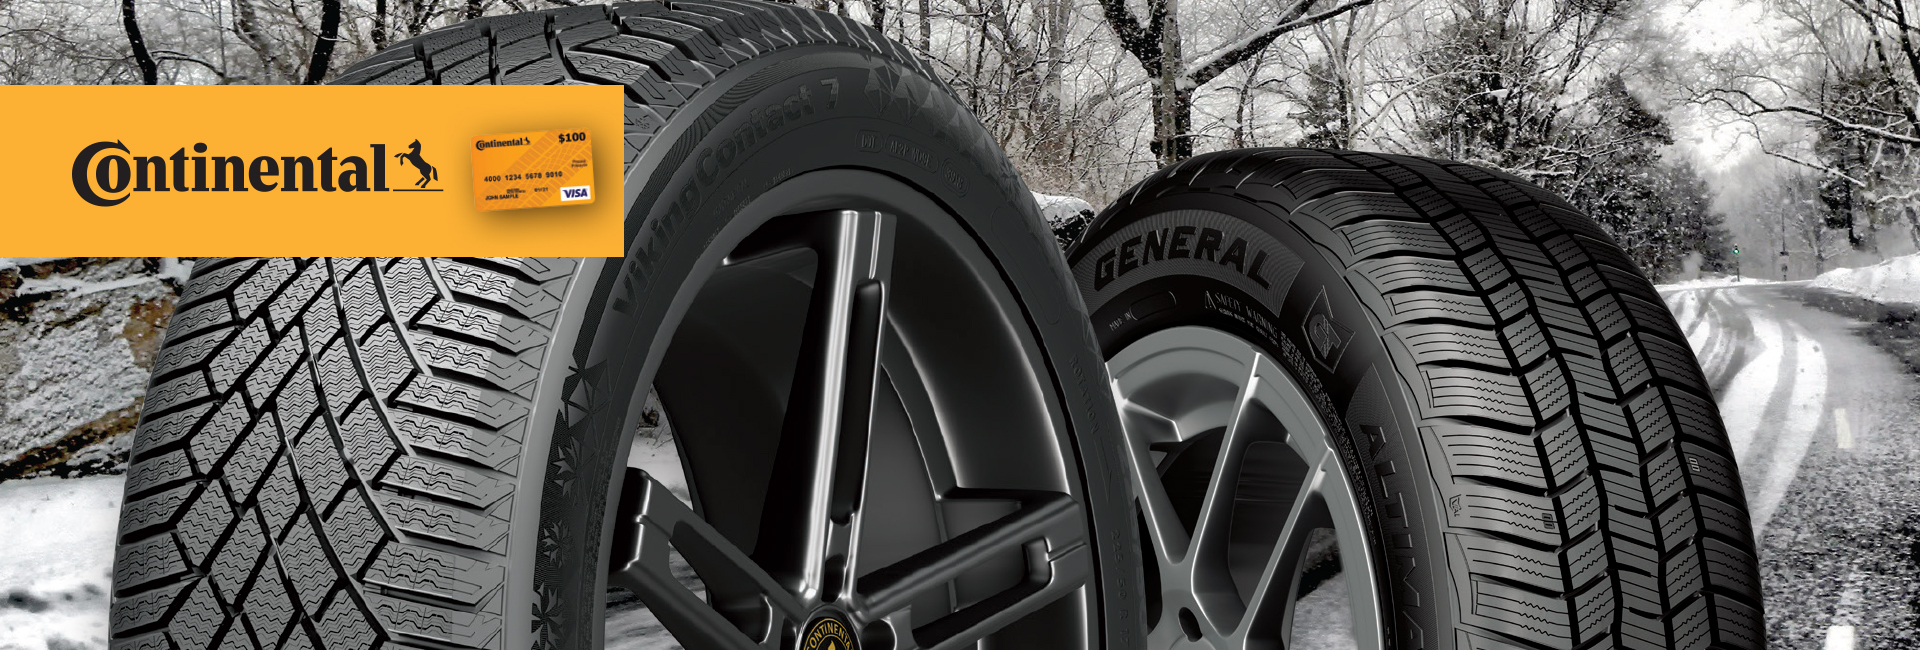 continental-tire-rebate-fall-2021-ok-tire